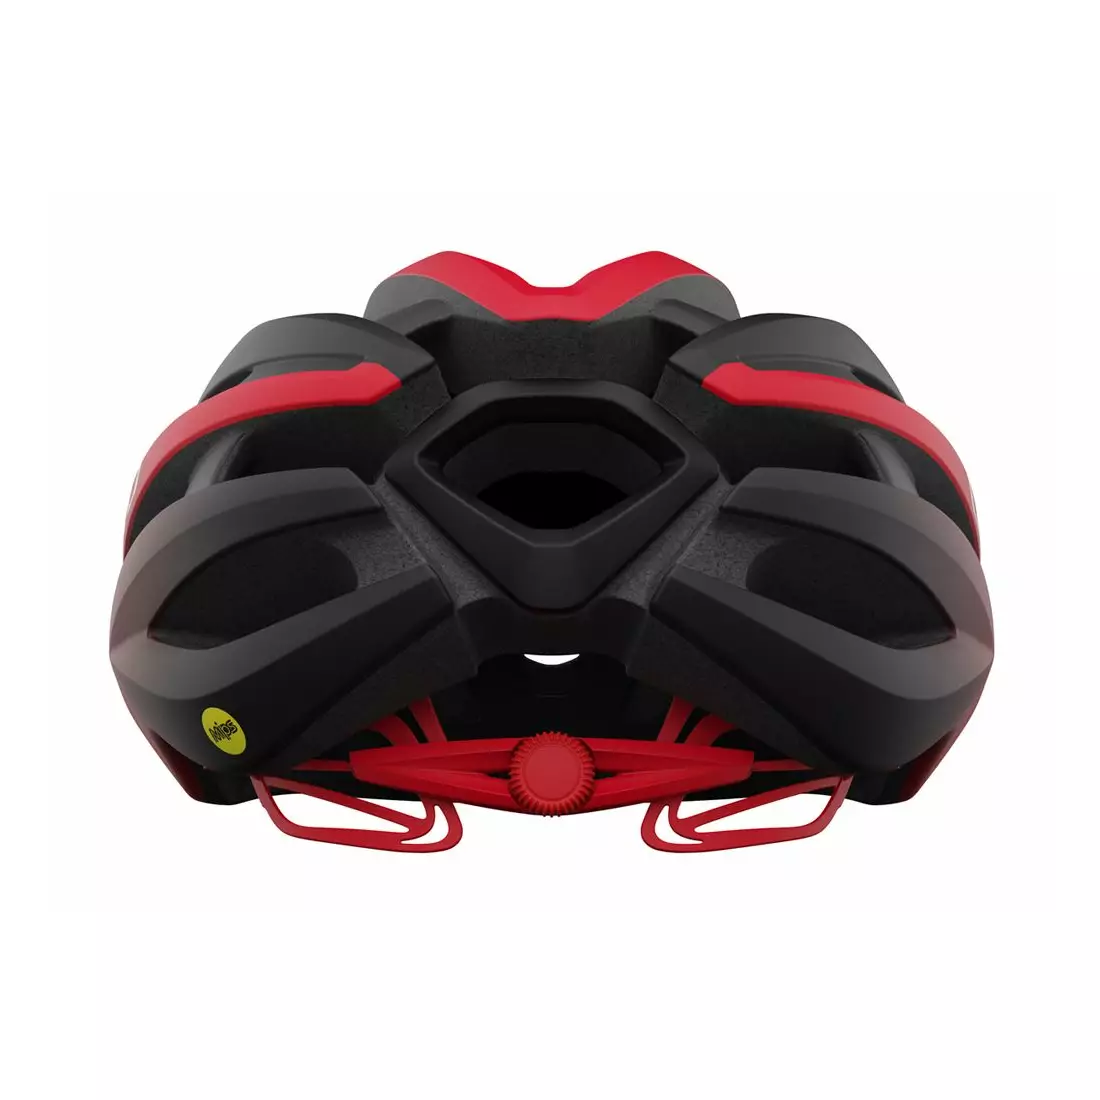 GIRO road bike helmet SYNTHE INTEGRATED MIPS II matte black bright red GR-7130770